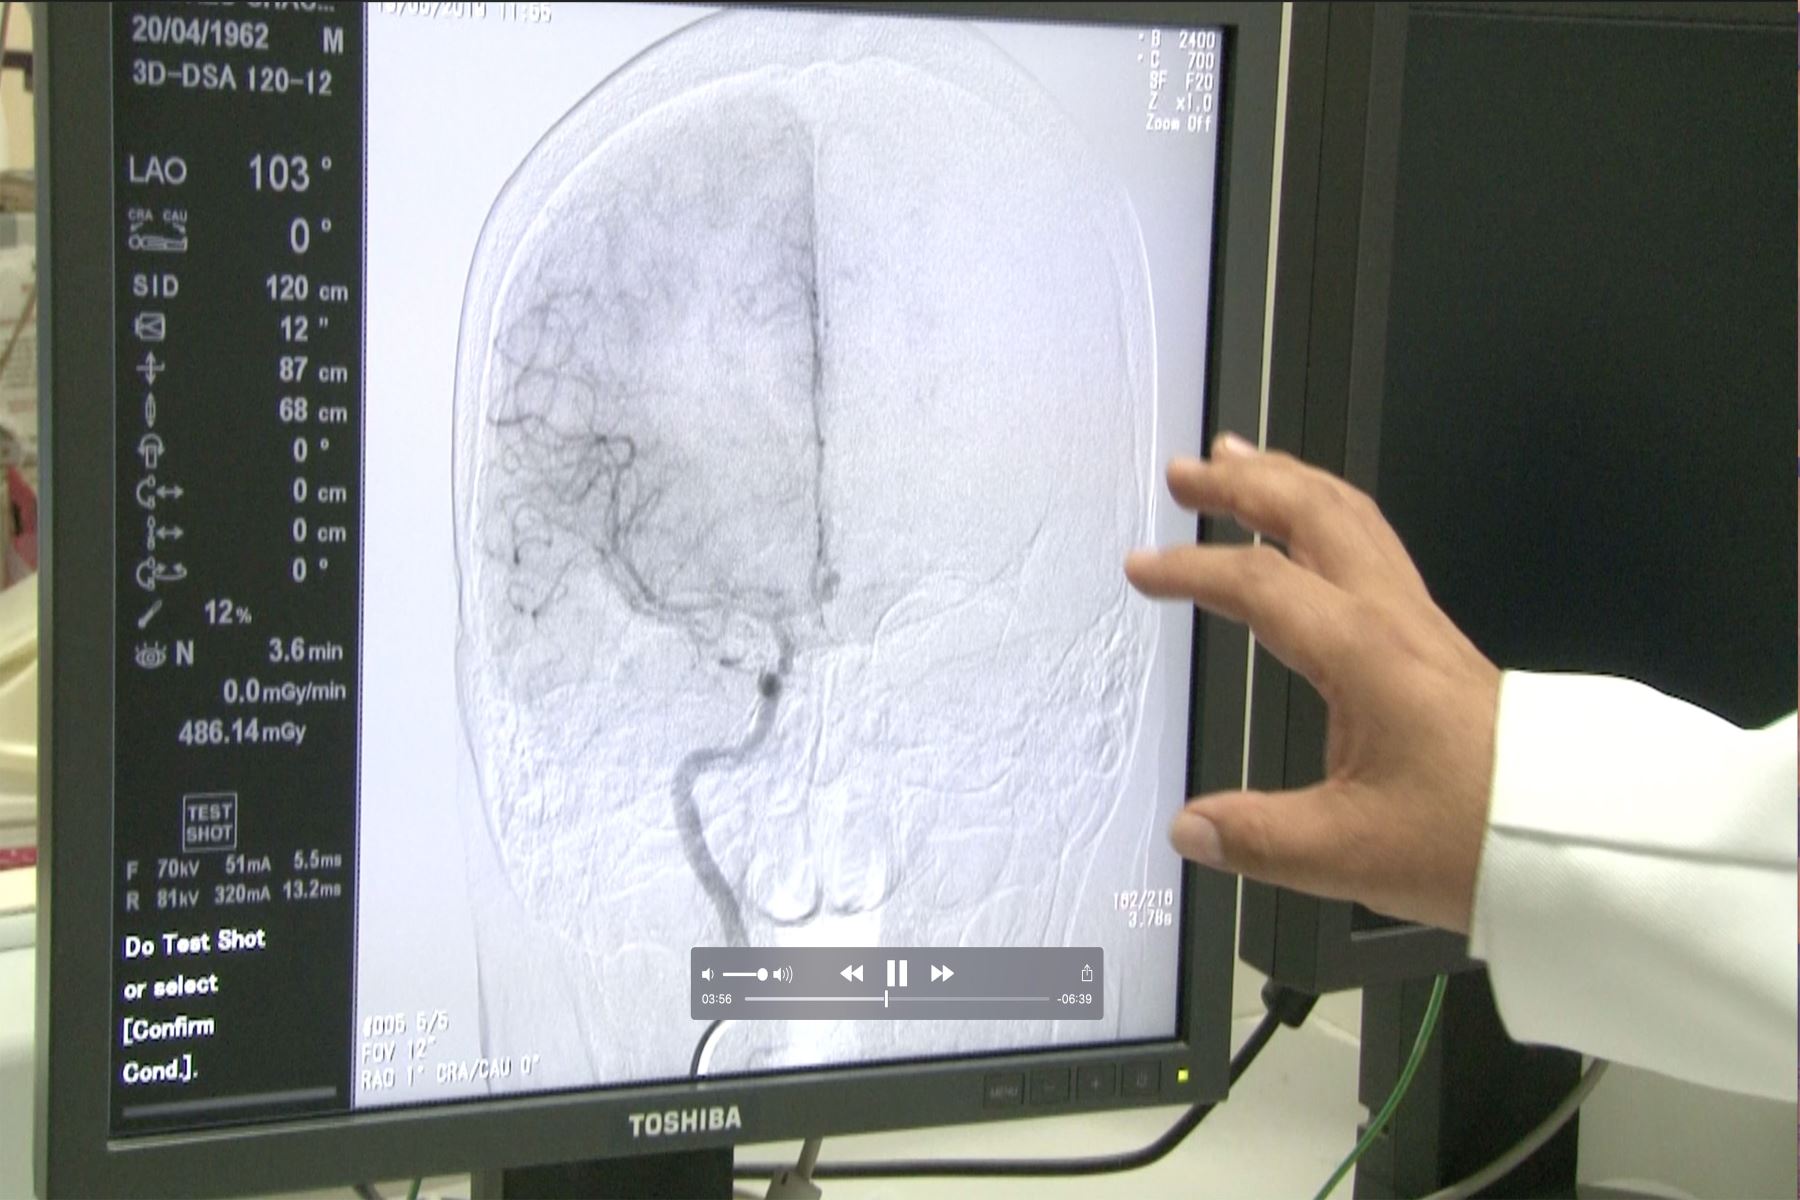 Procedimiento con moderno angiógrafo del hospital Carrión salvavidas de pacientes con problemas cerebrovasculares, foto: Andina/Difusión